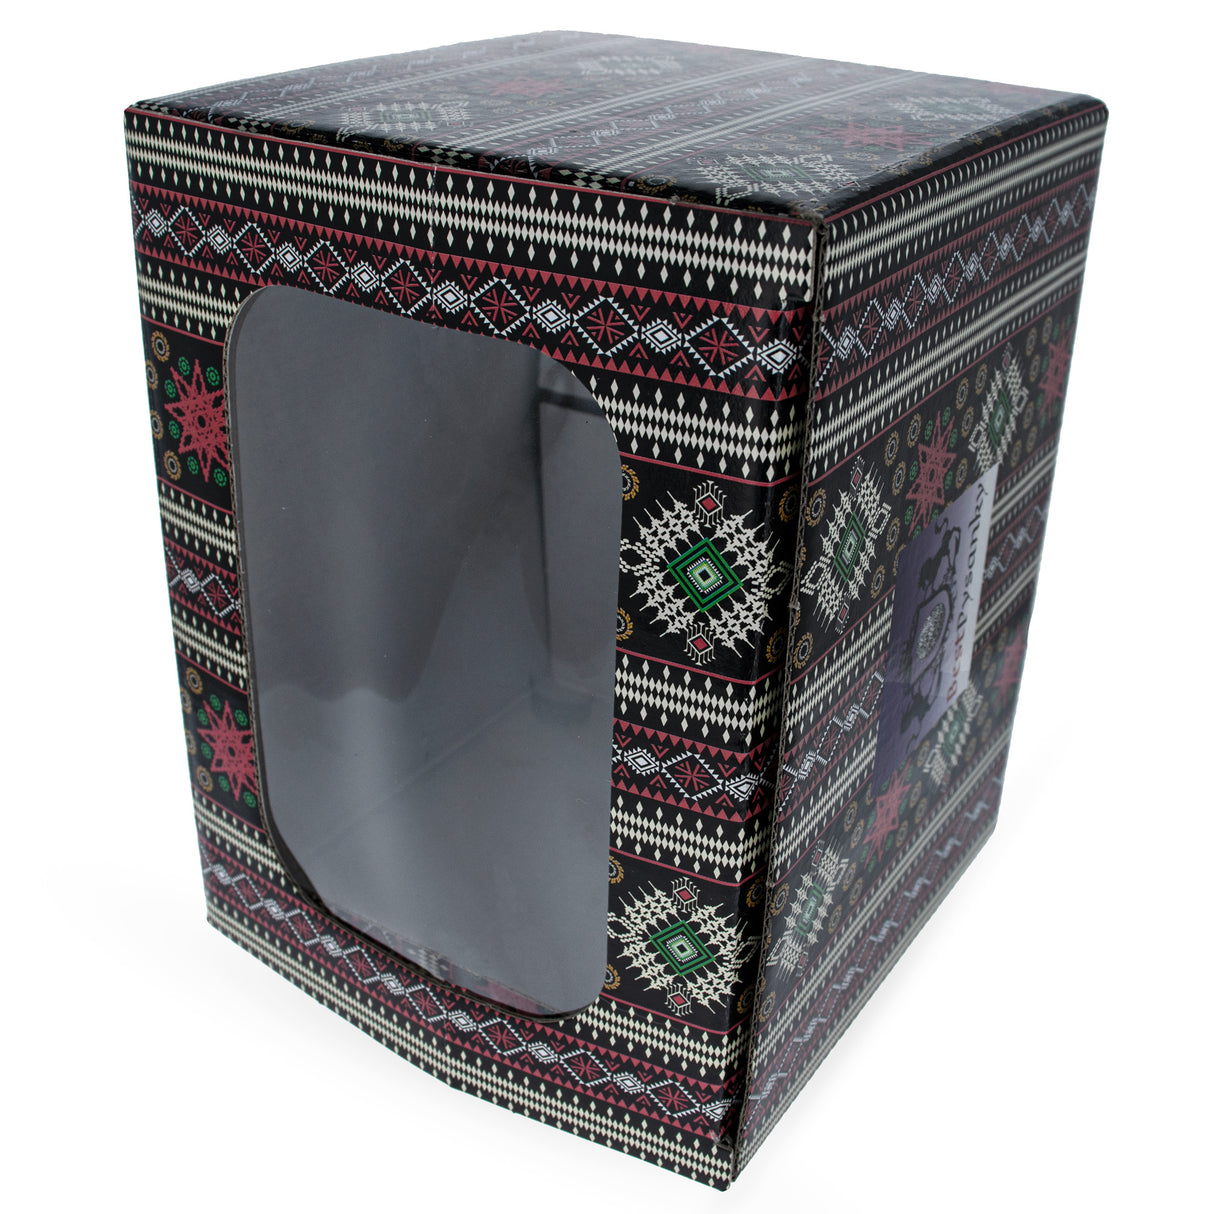 Geometric Design Ukrainian Gift Box with Display Window 7.1 x 5.5 x 5.5 InchesUkraine ,dimensions in inches: 15 x 12.5 x 0.1